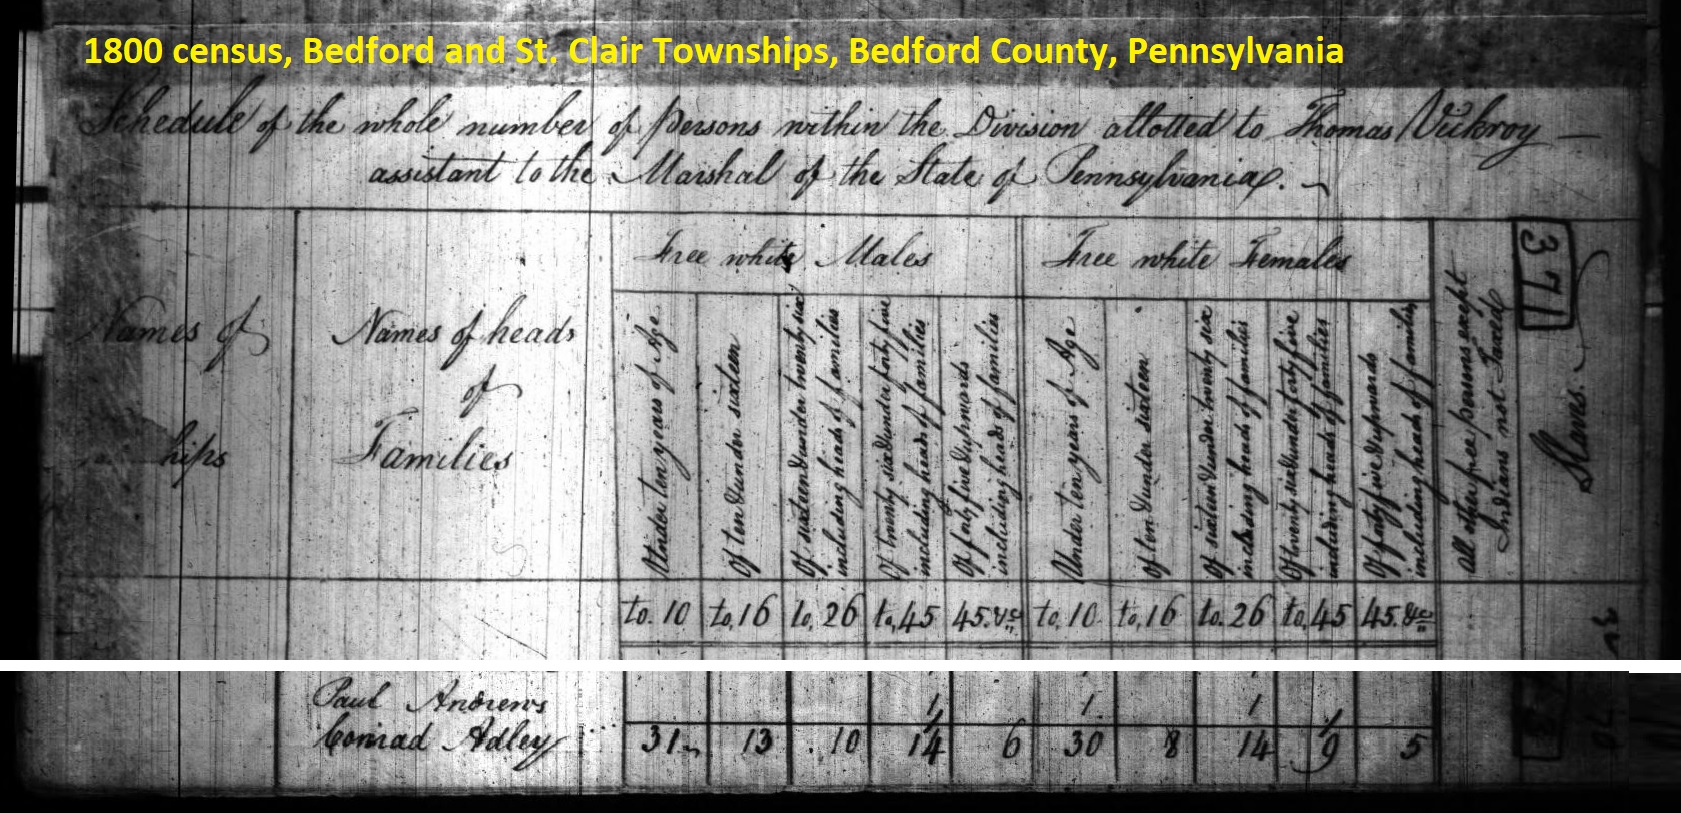 Conrad Atley in the 1800 census of Bedford County, Pennsylvania.